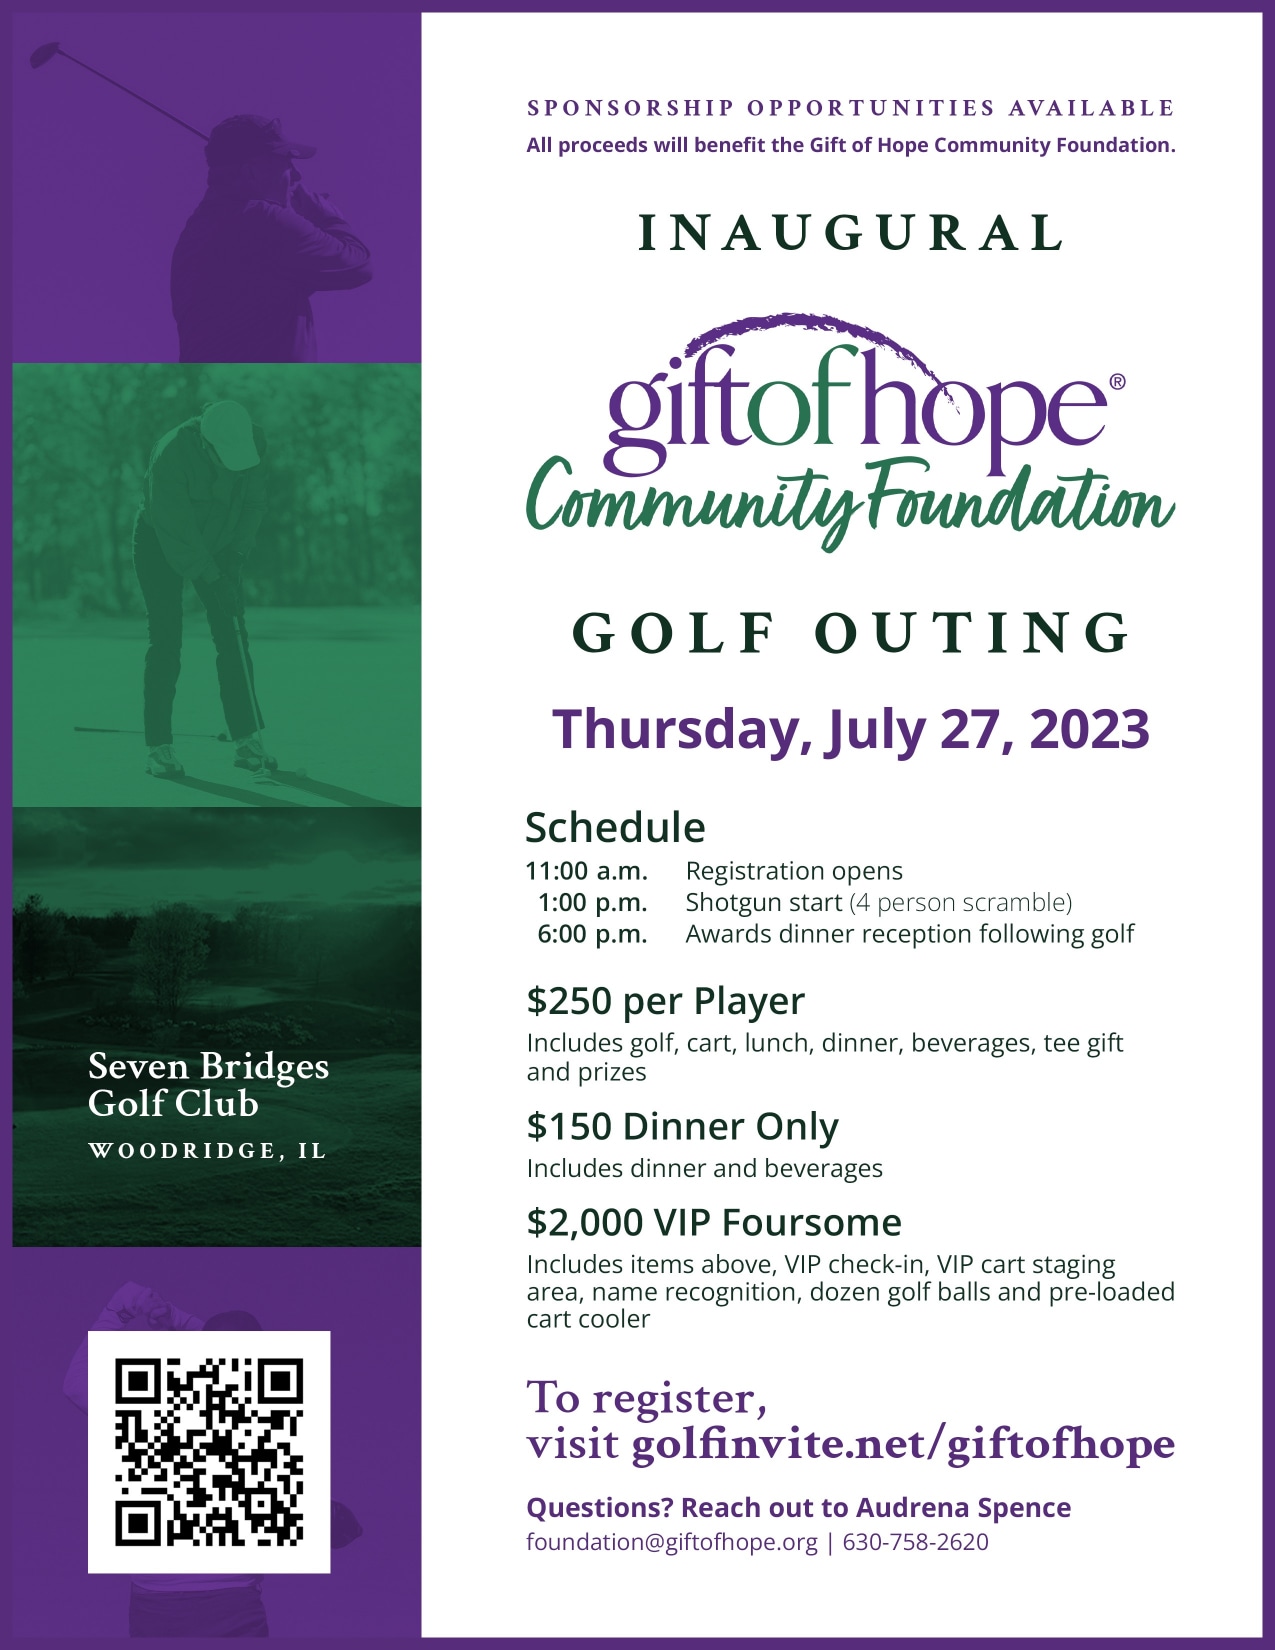 Hope Network Foundation - 2023 Hope Network Golf Classic